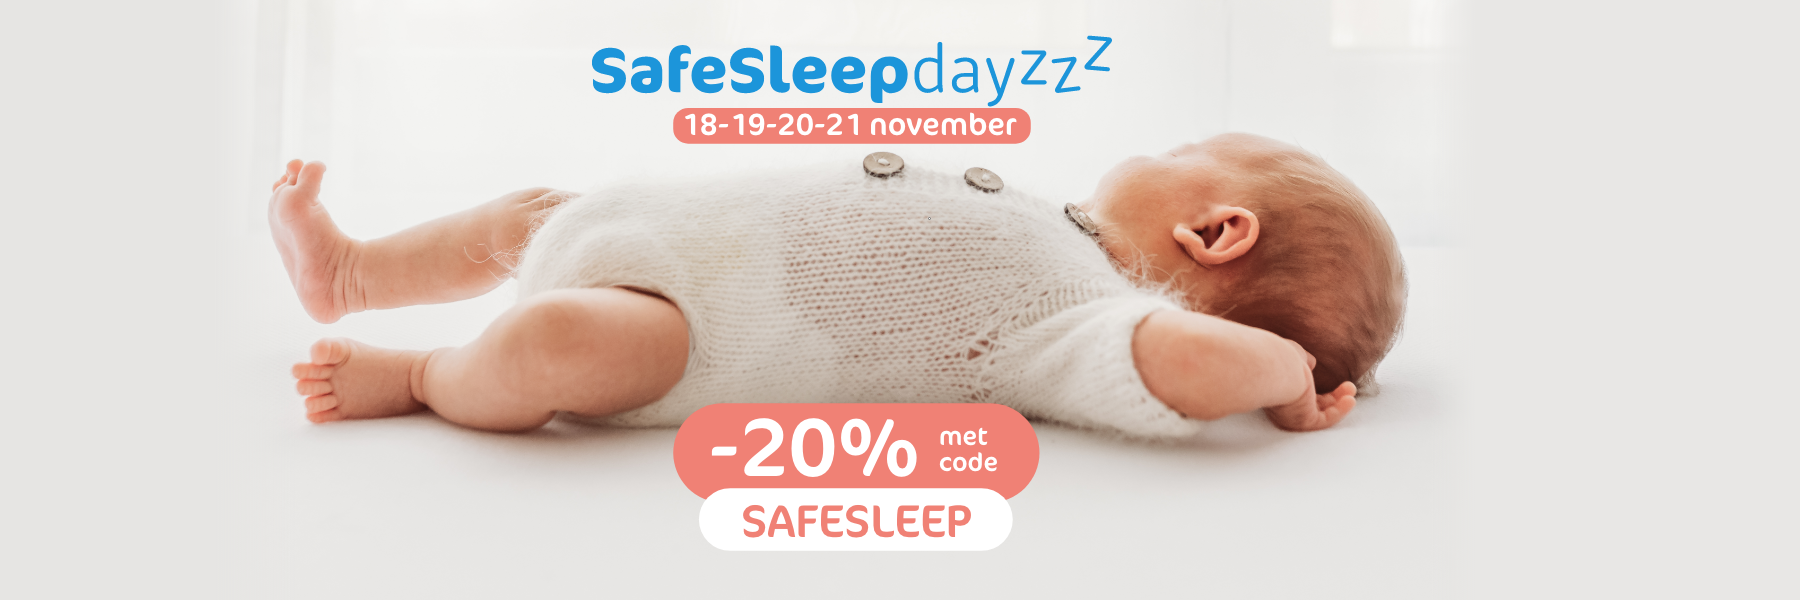 SafeSleepDayzzz: 20% korting op alles!